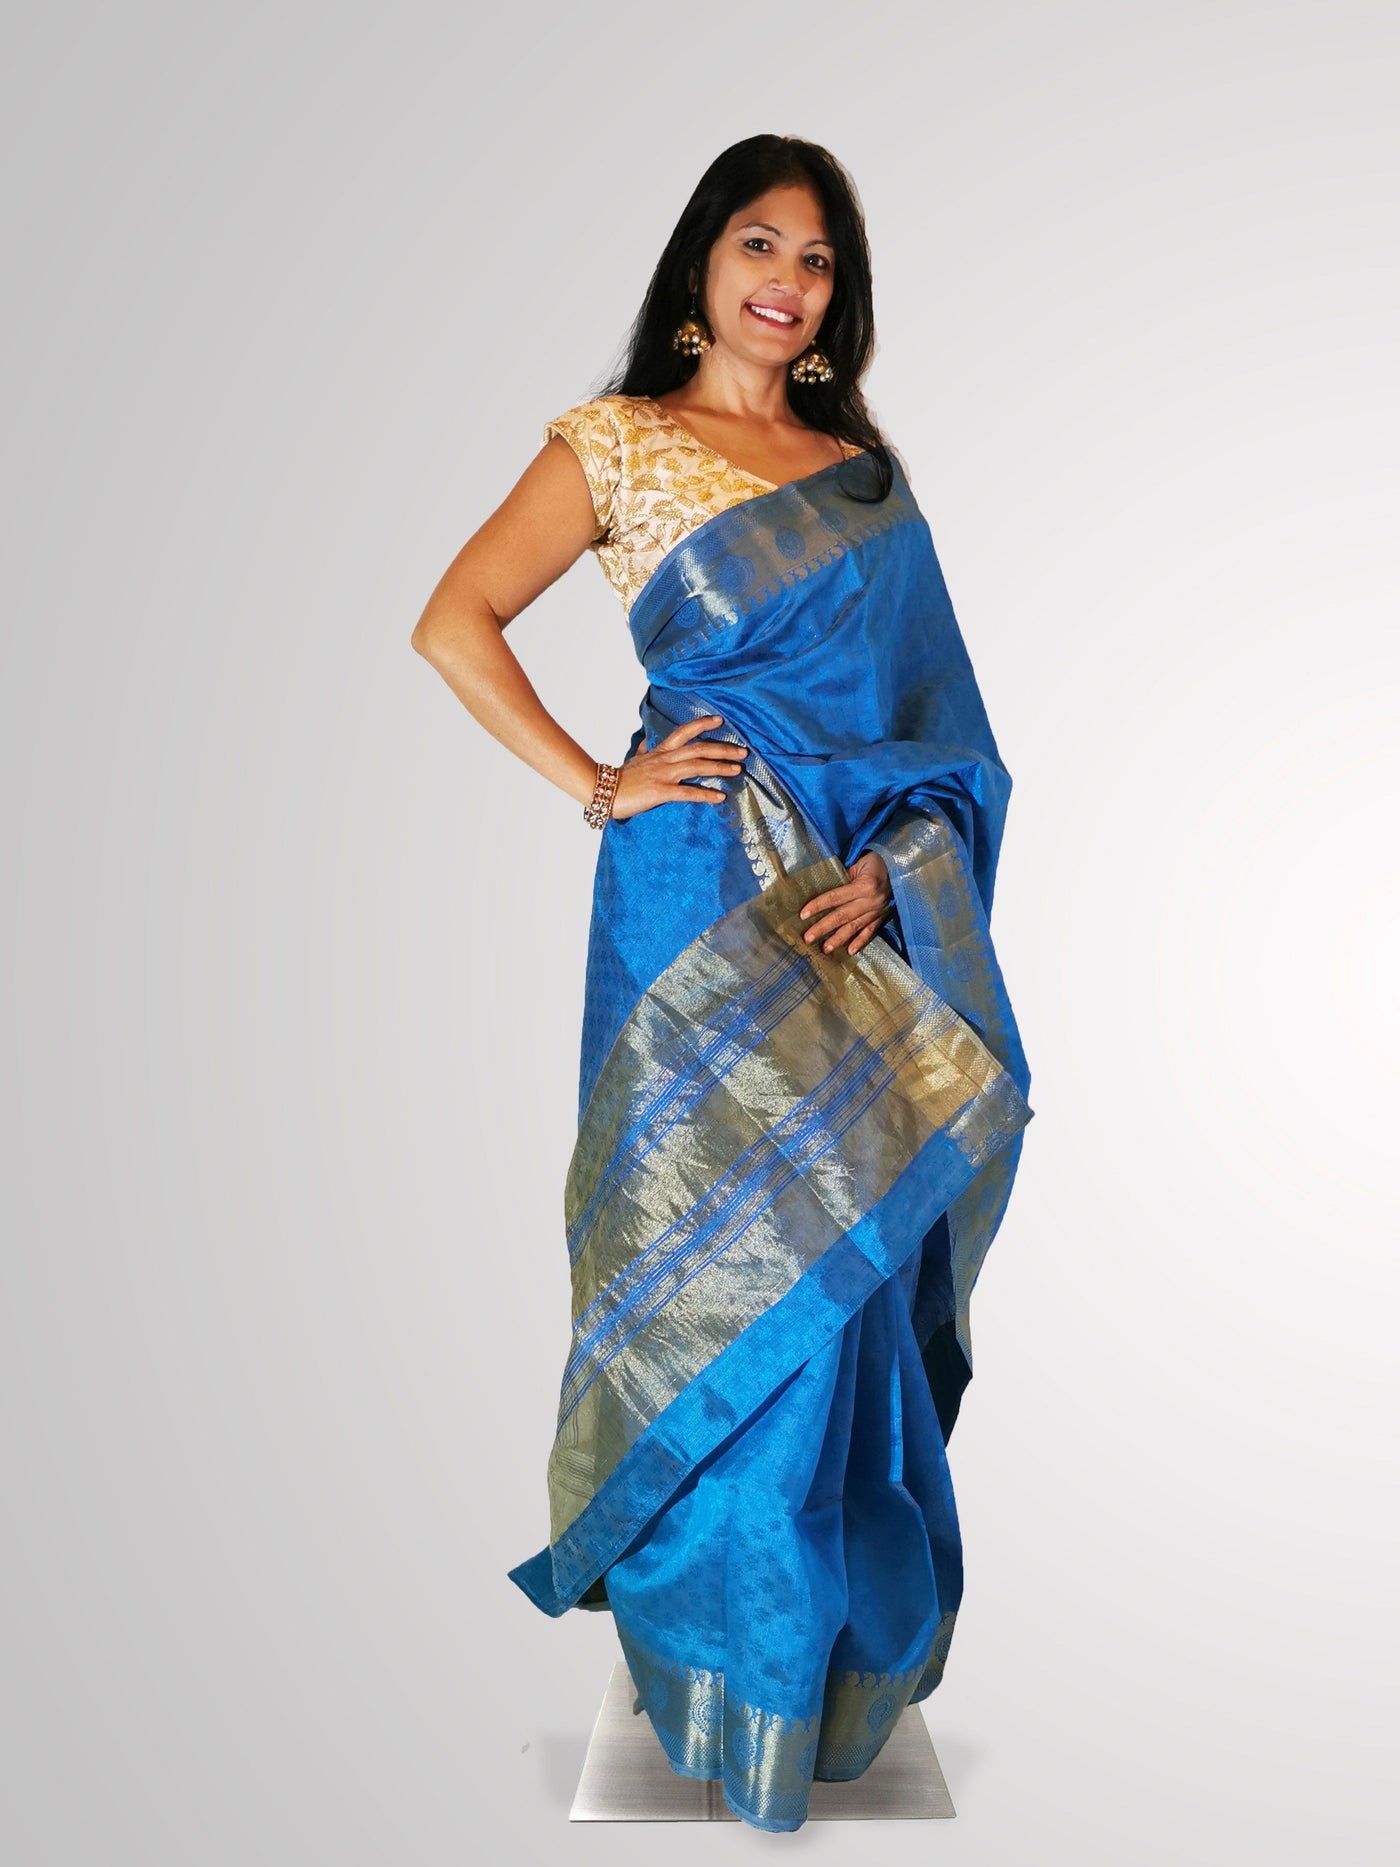 Blue Banarasi Silk Saree Indian Clothing in Denver, CO, Aurora, CO, Boulder, CO, Fort Collins, CO, Colorado Springs, CO, Parker, CO, Highlands Ranch, CO, Cherry Creek, CO, Centennial, CO, and Longmont, CO. NATIONWIDE SHIPPING USA- India Fashion X